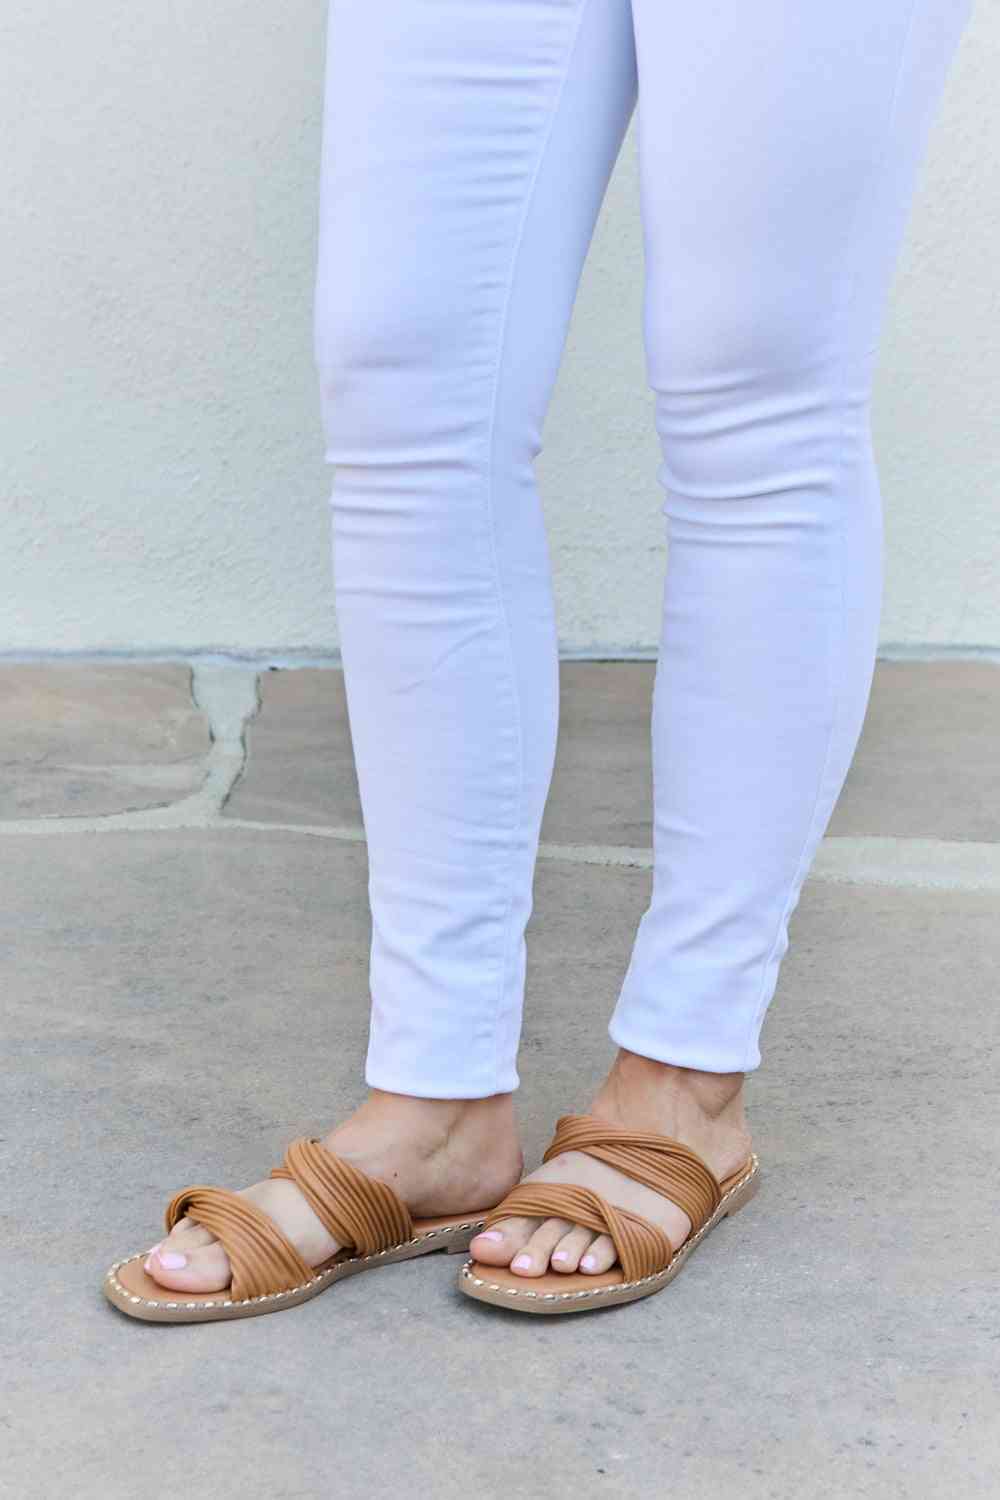 Qupid Summertime Fine Double Strap Twist Sandals